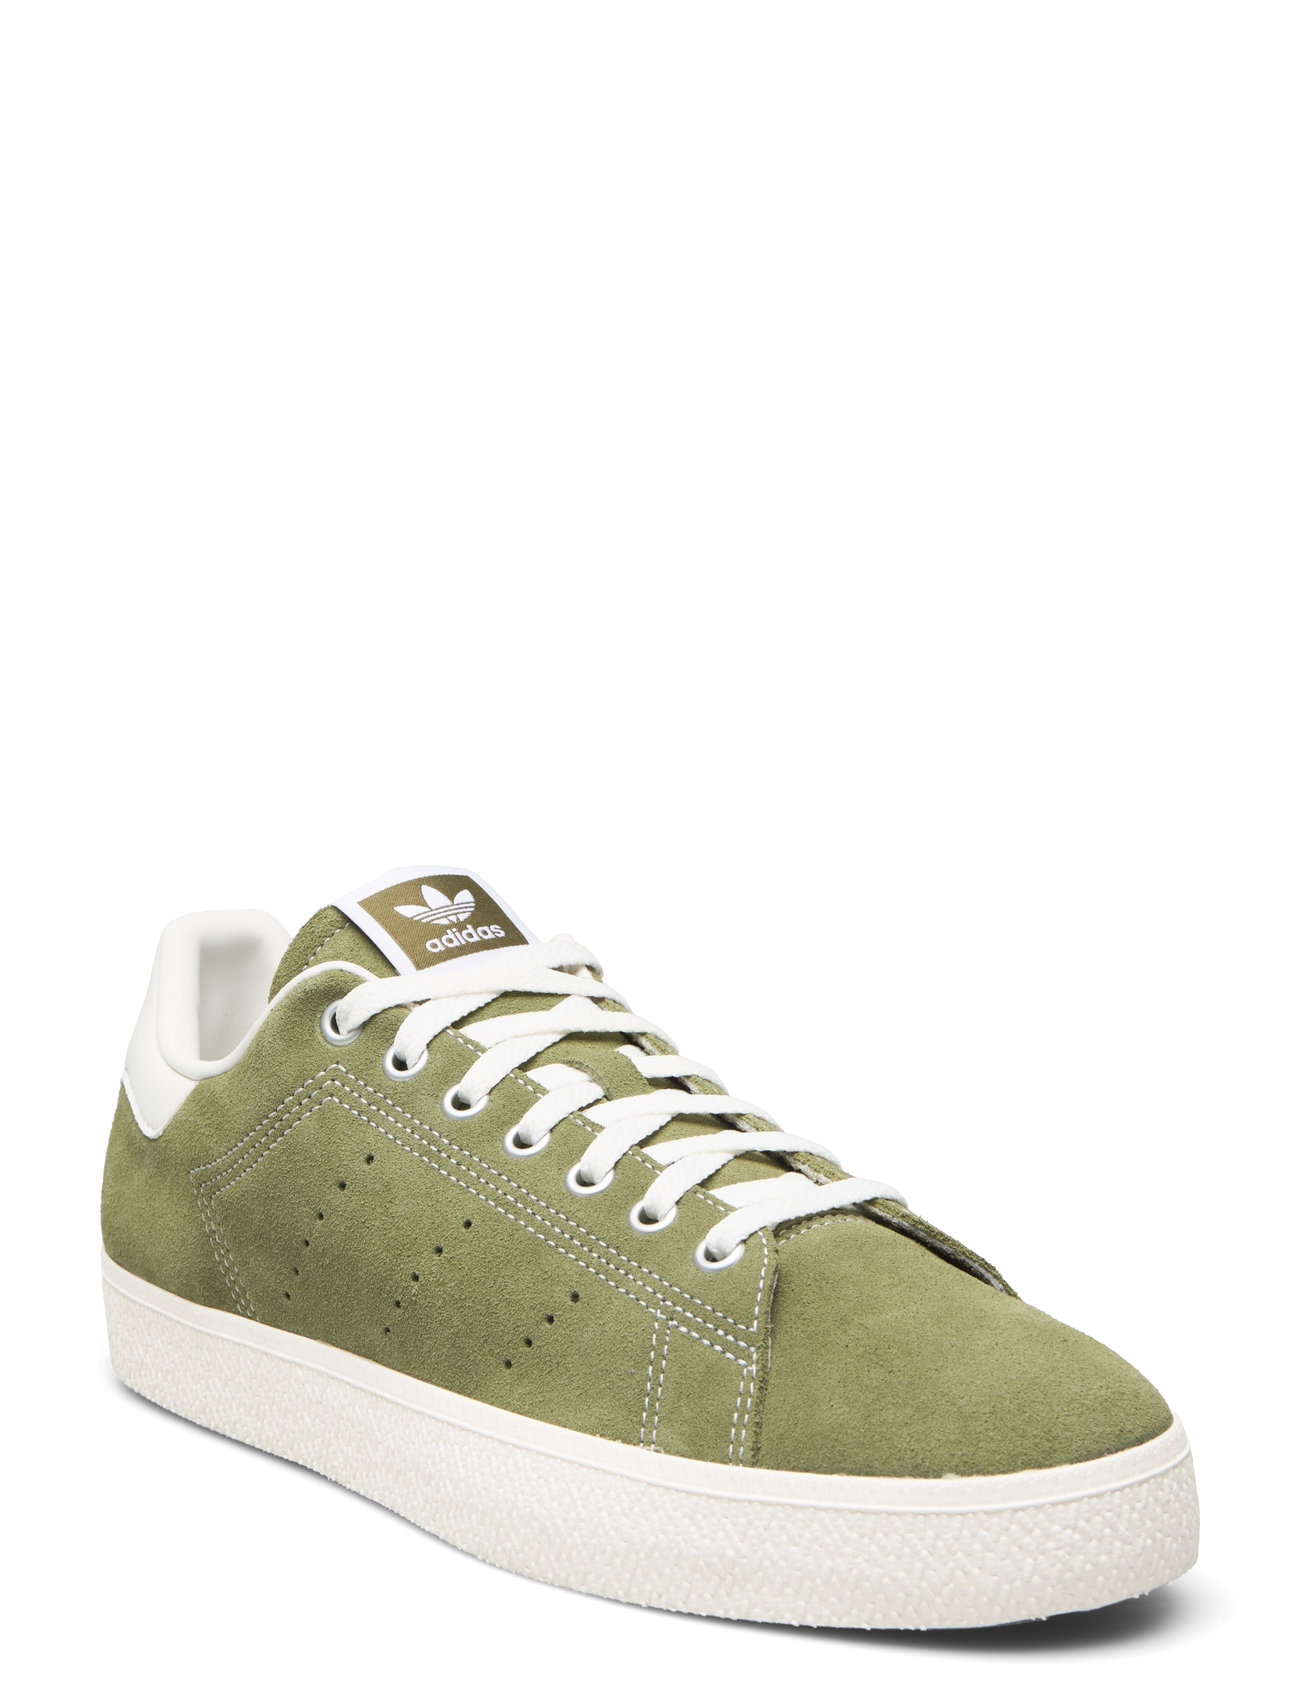 Stan Smith Cs Sport Sneakers Low-top Sneakers Khaki Green Adidas Originals